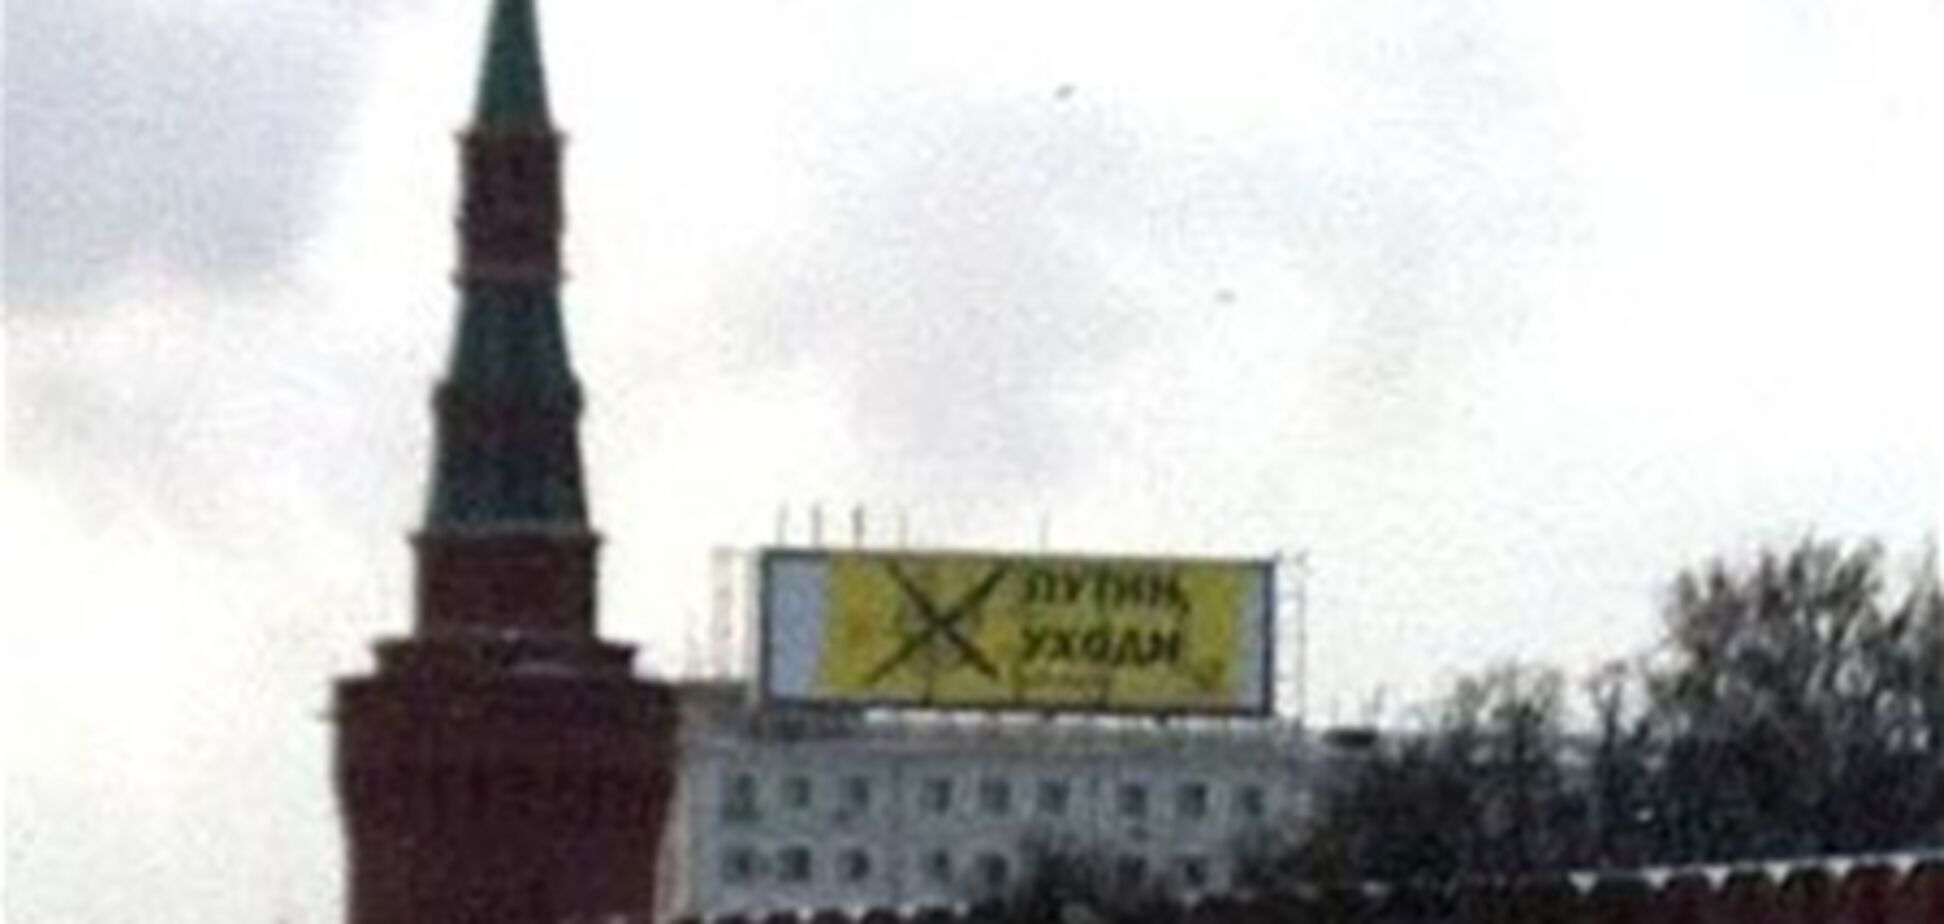 Напротив Кремля повесили баннер 'Путин, уходи'. Фото